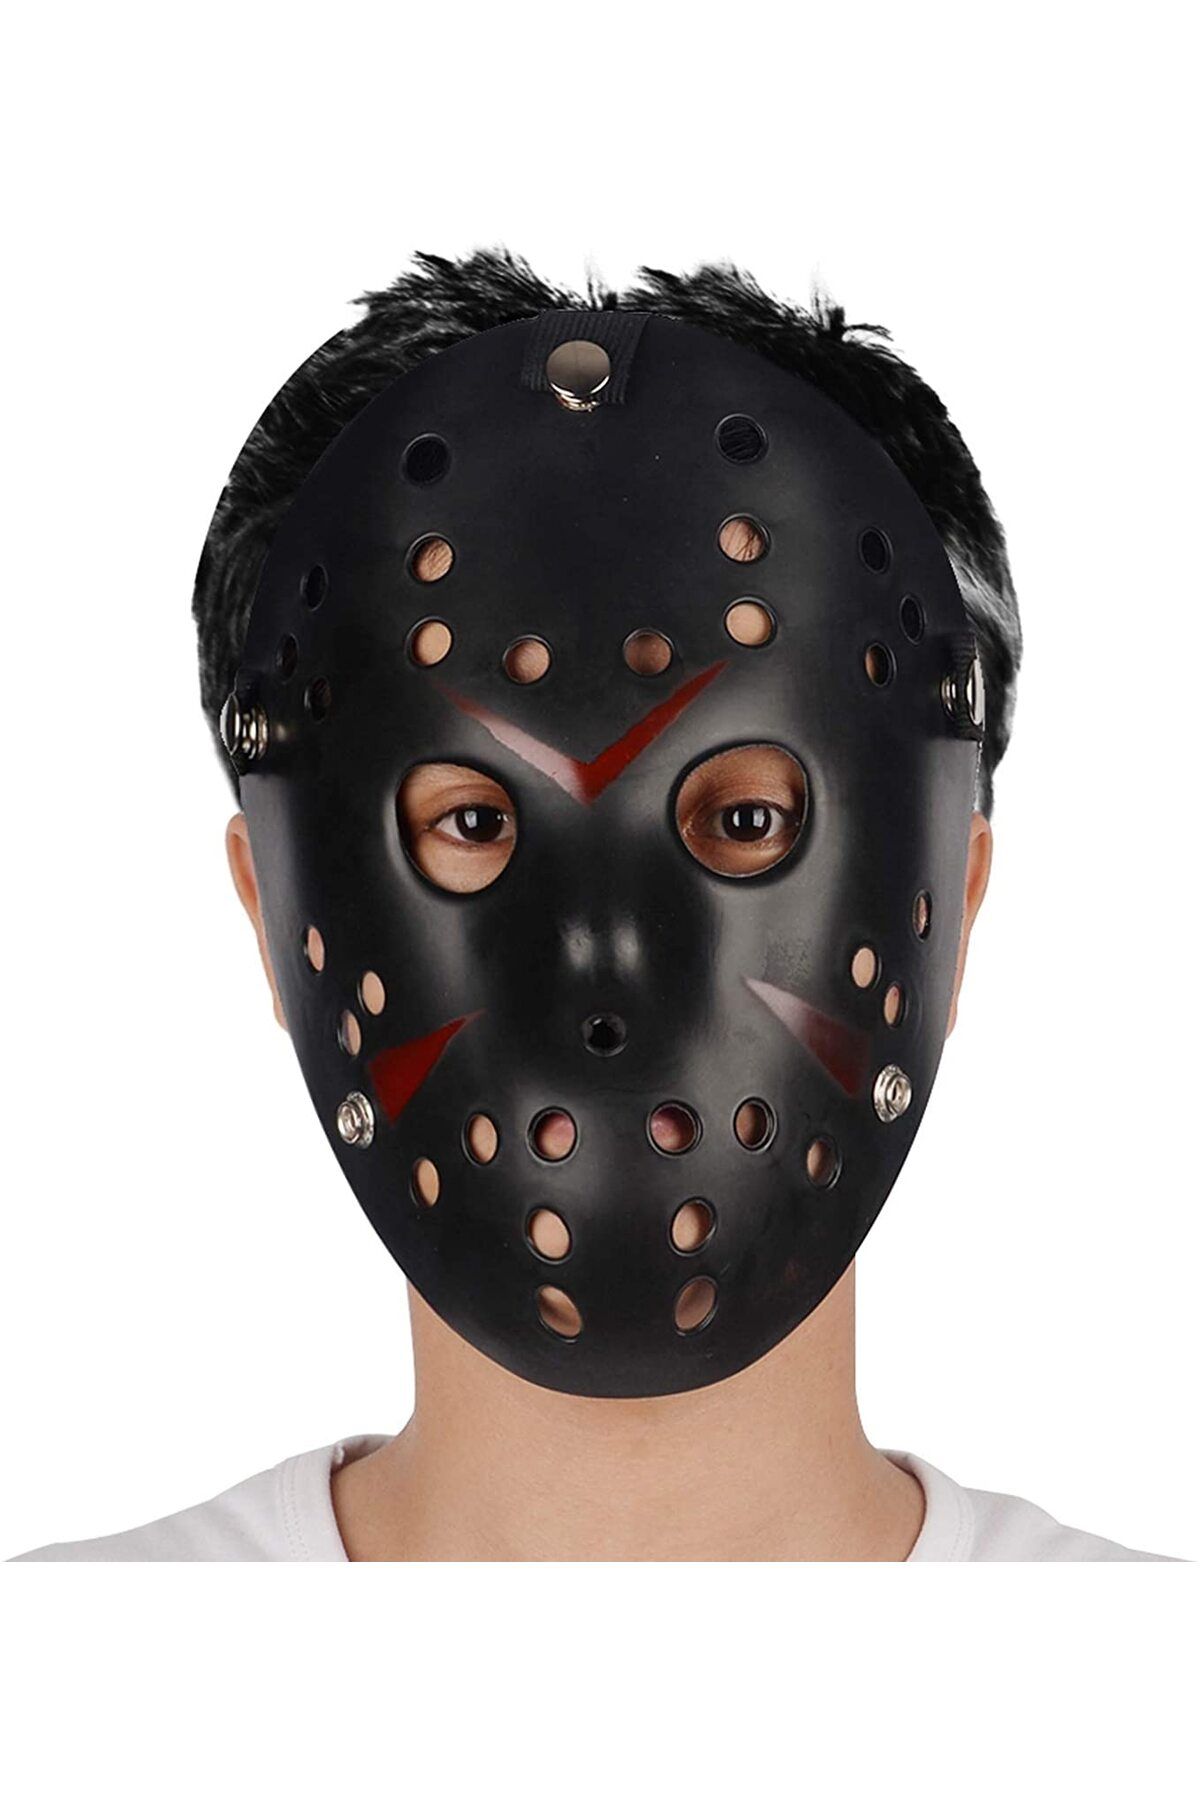 MAGAZZINO DELLAMORE Siyah Renk Kırmızı Çizgili Tam Yüz Hokey Jason Maskesi Hannibal Maskesi